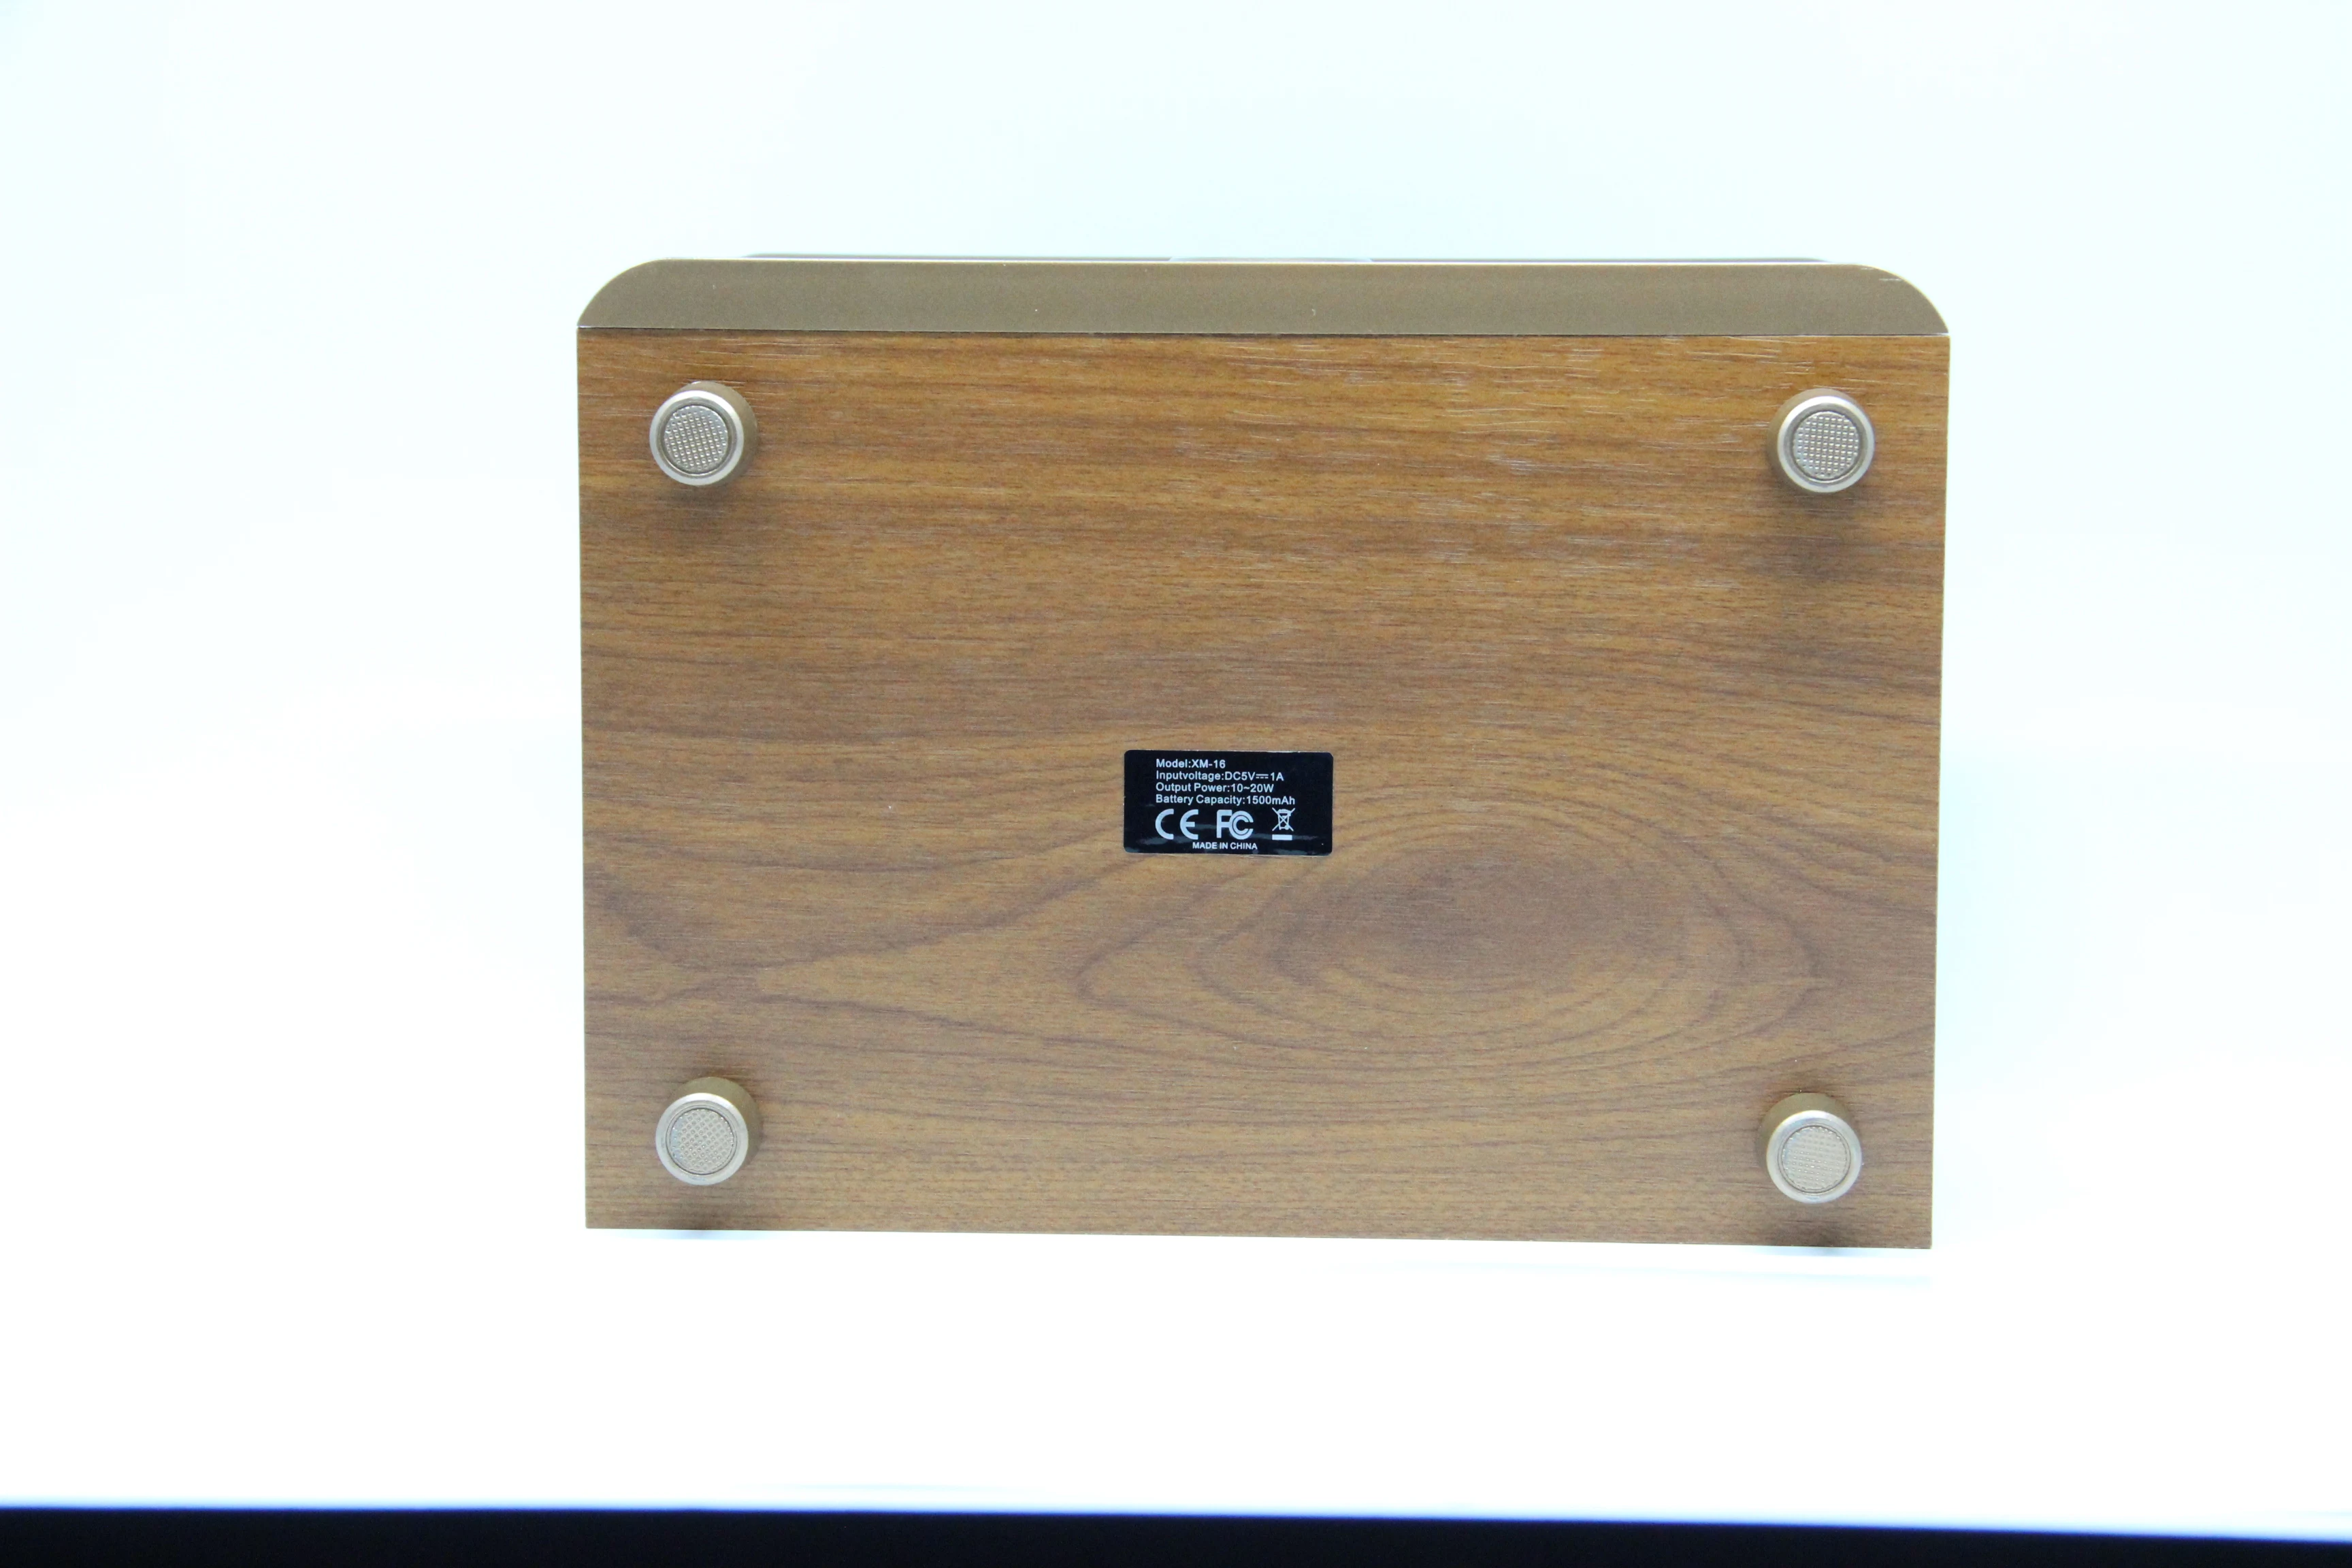 2022 Smart Tech Home Gadgets Sound Box Antique Wooden Portable Subwoofer Strong Bass Surround Sound Wireless Speaker